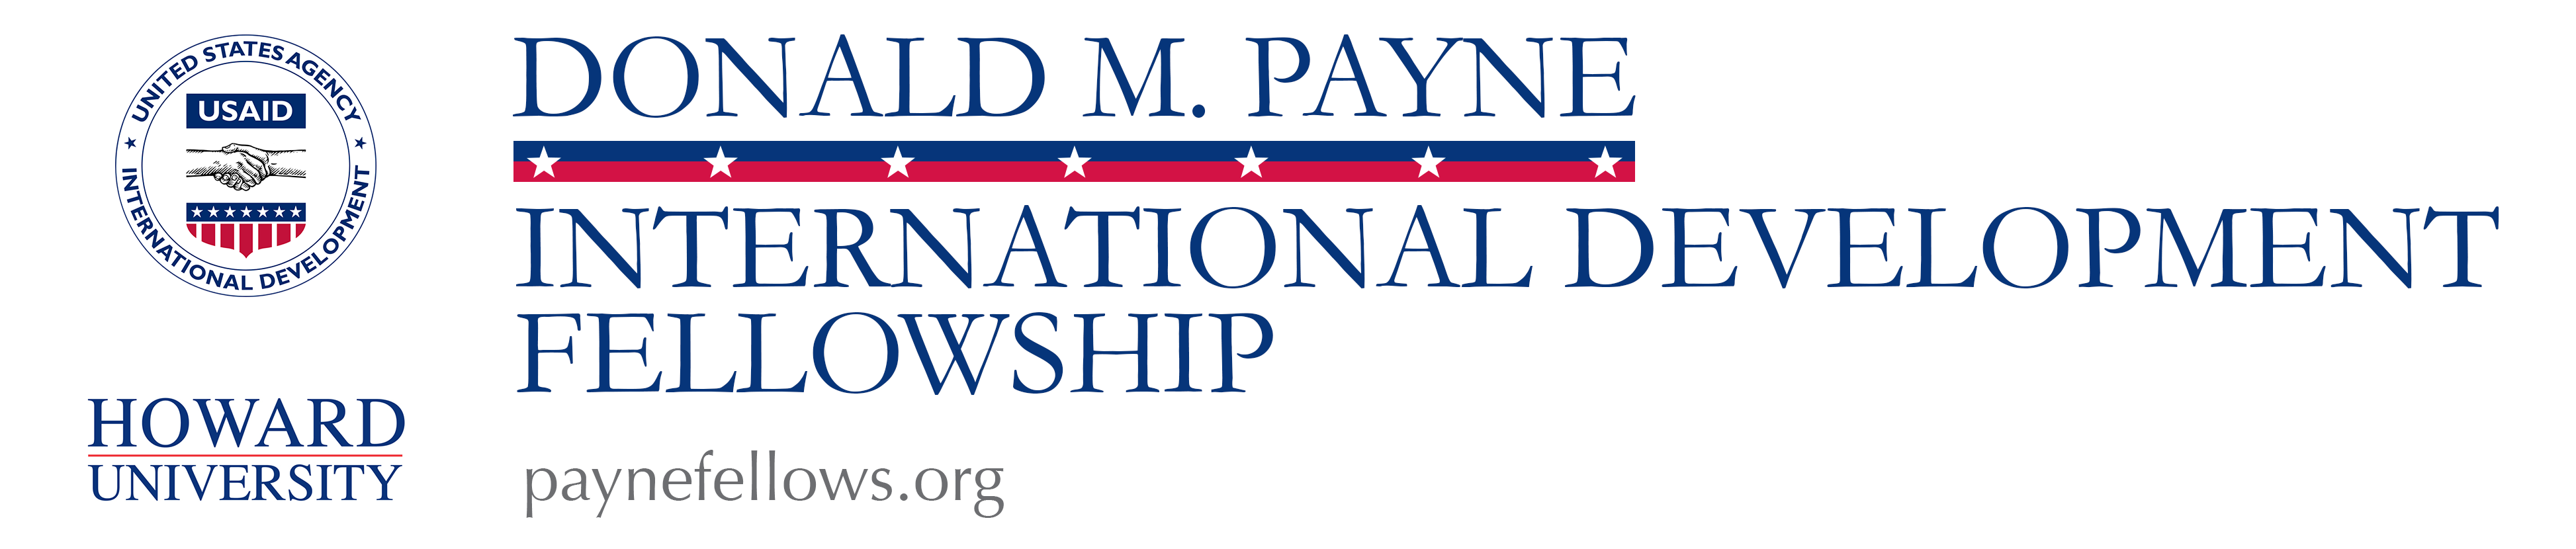 Payne Fellowship Applications Due 11/1